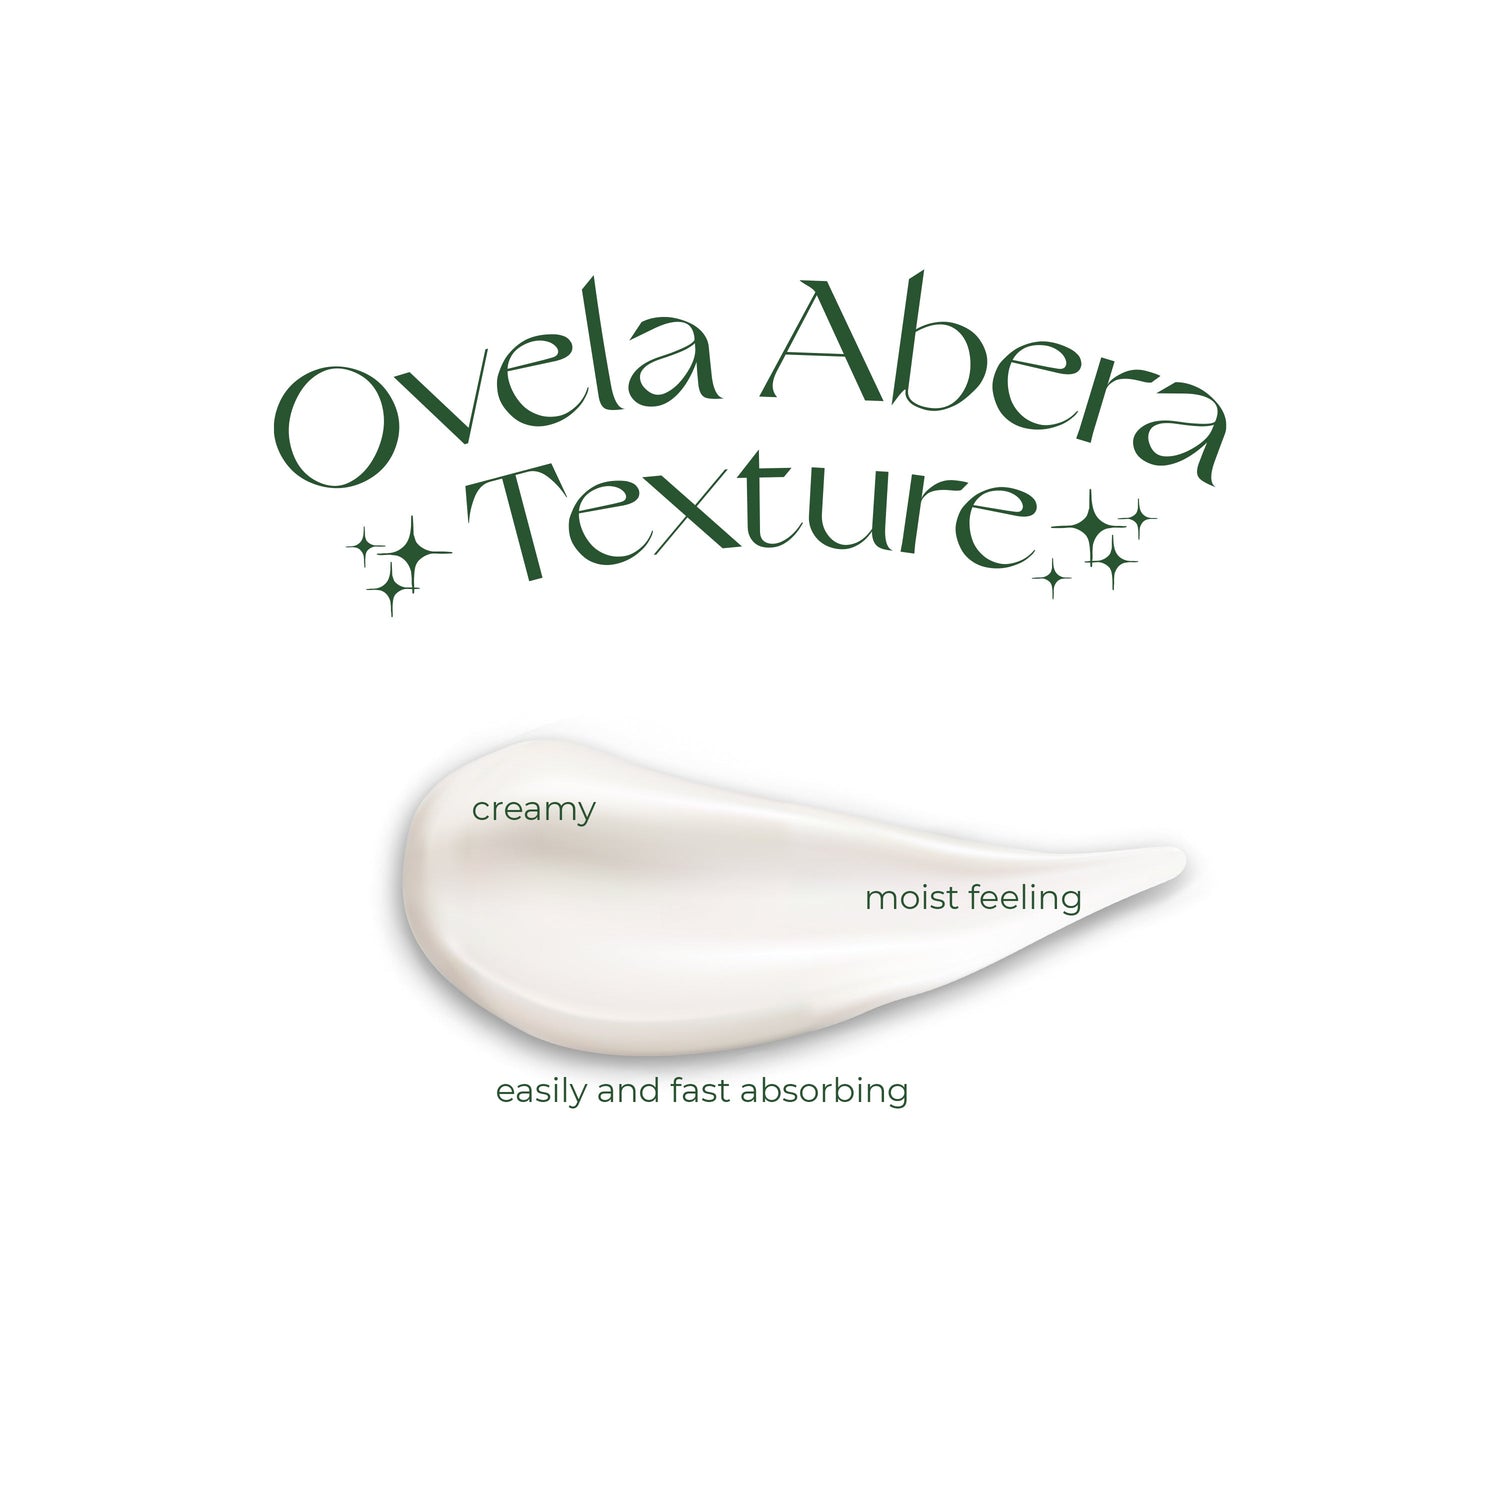 Ovela Abera Stretch Mark Cream - Limited